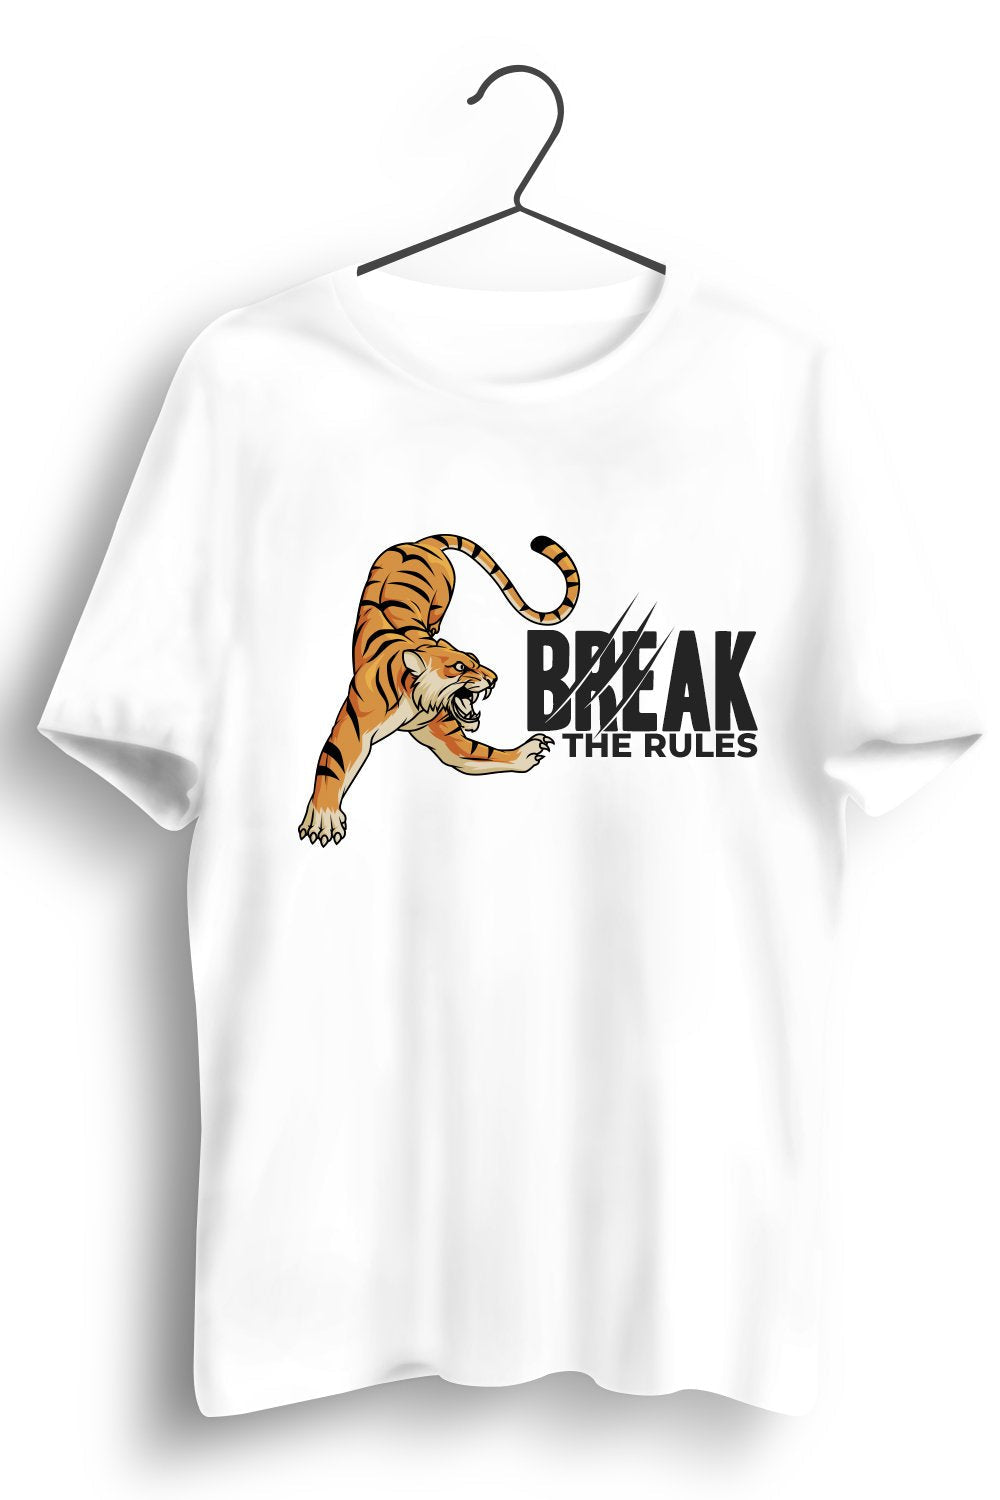 Break The Rules Graphic Printed White Tshirt